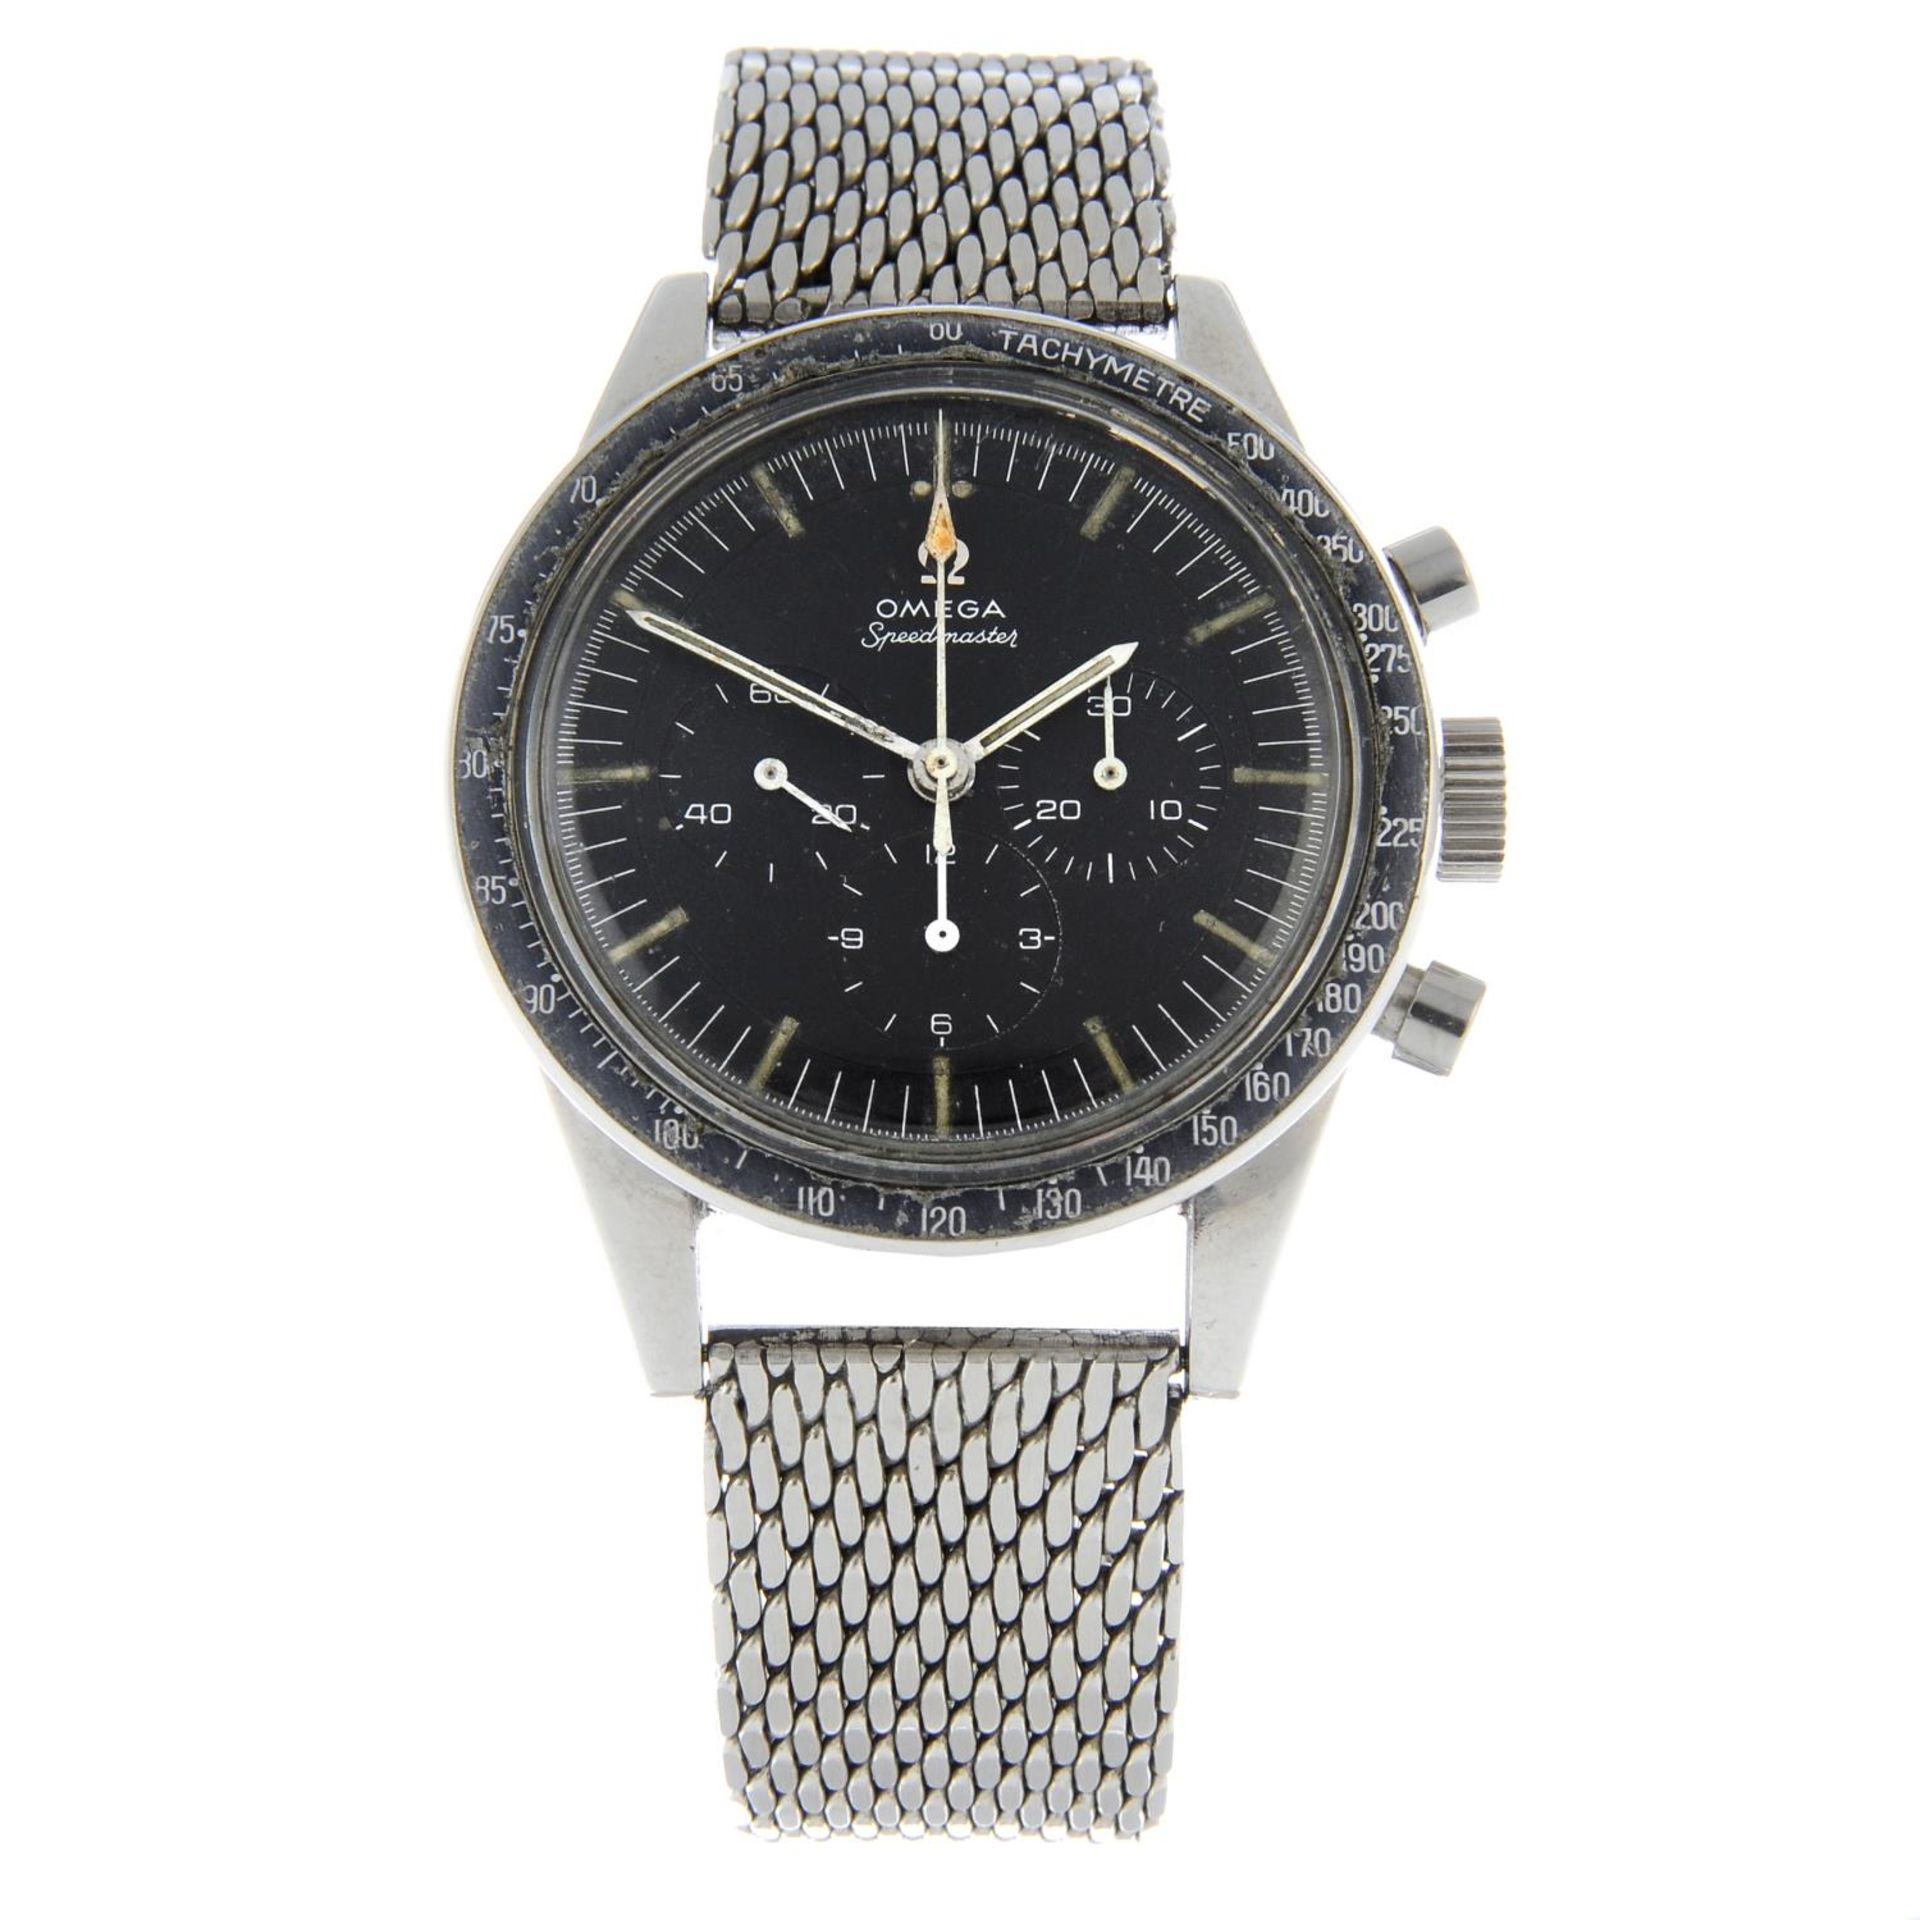 OMEGA - a Speedmaster 'Ed White' chronograph bracelet watch.